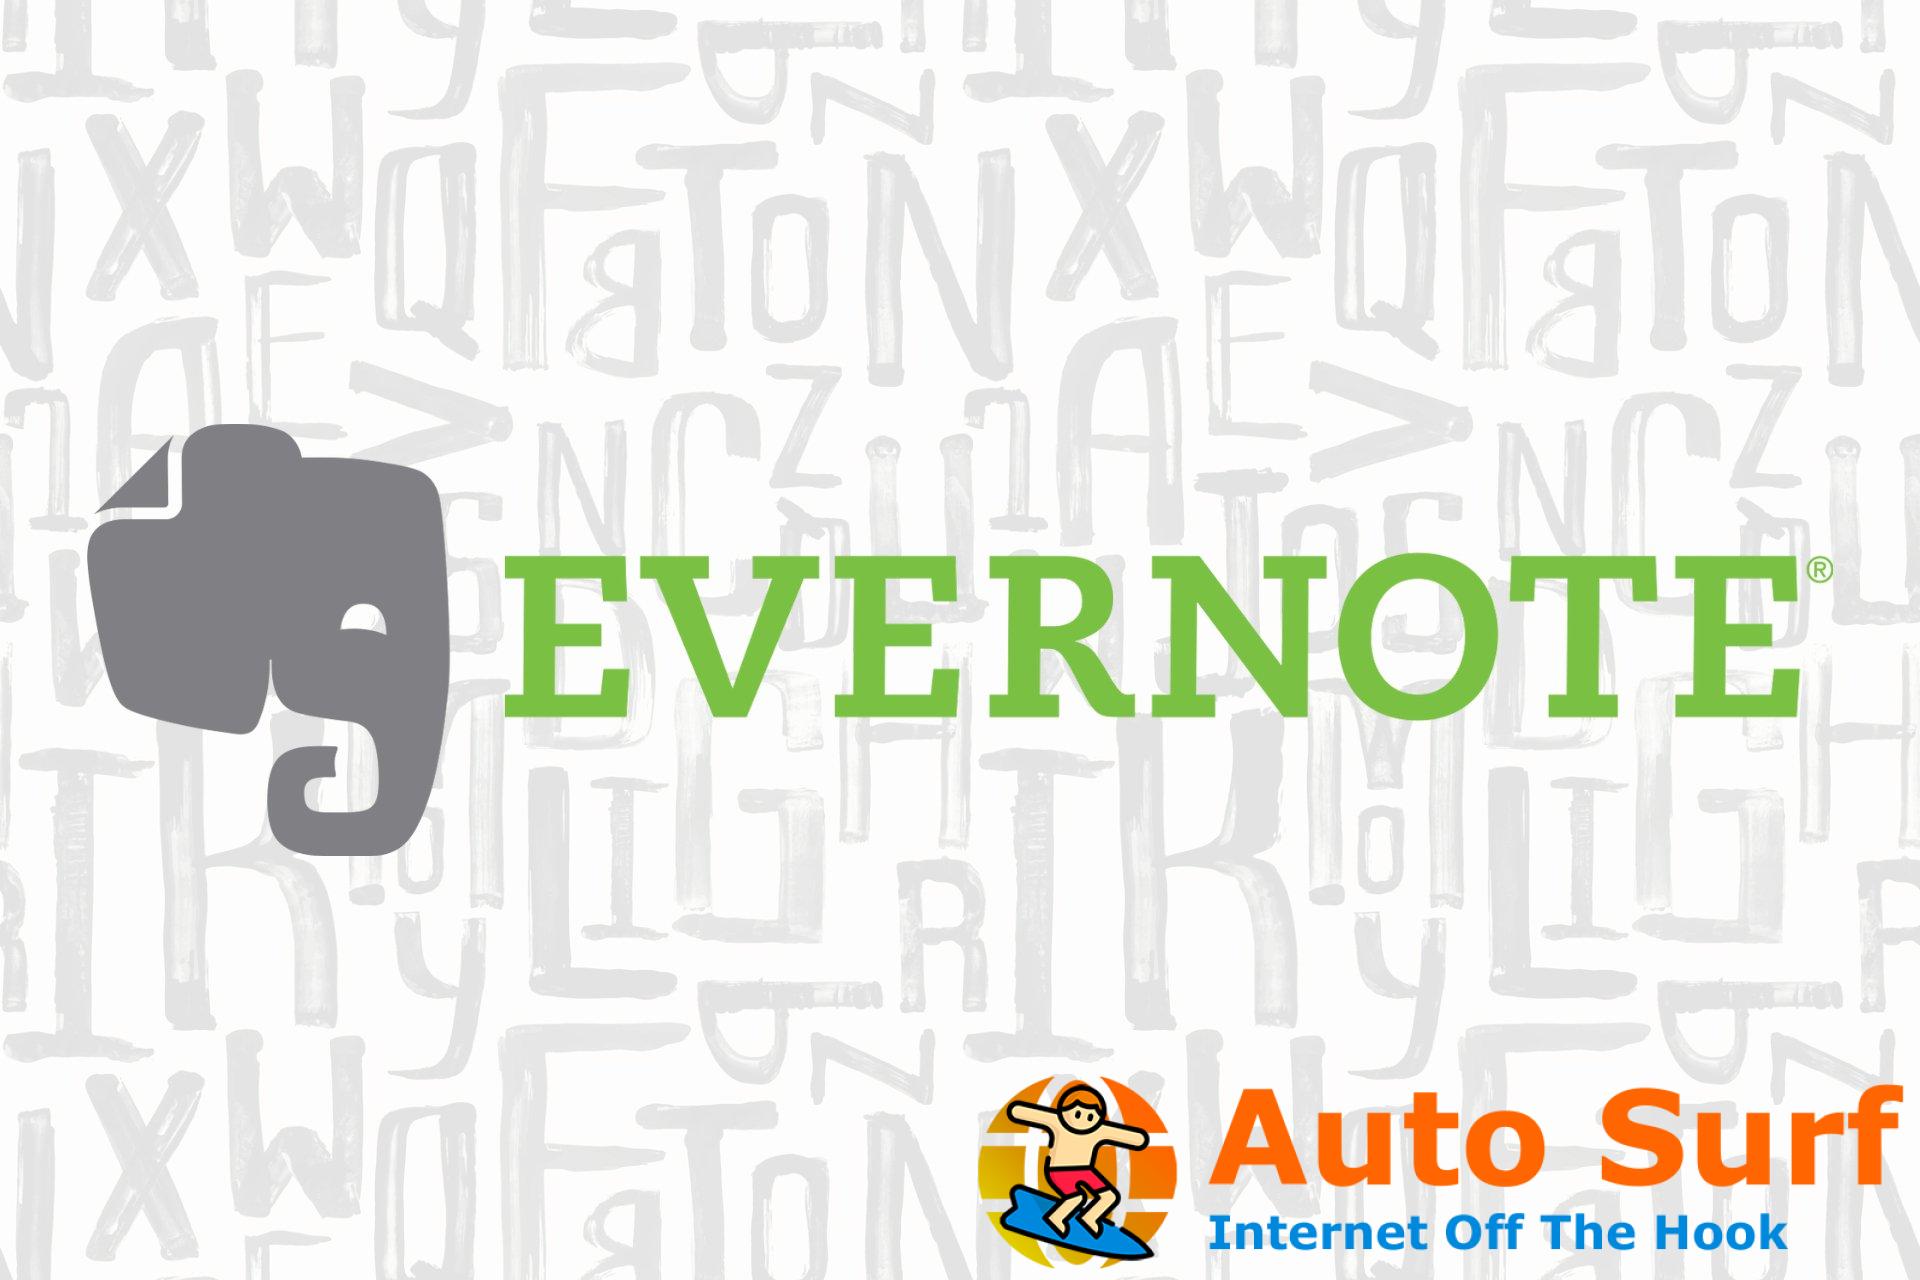 Descarga la aplicación Evernote para Windows 10/11 [Link and Review]